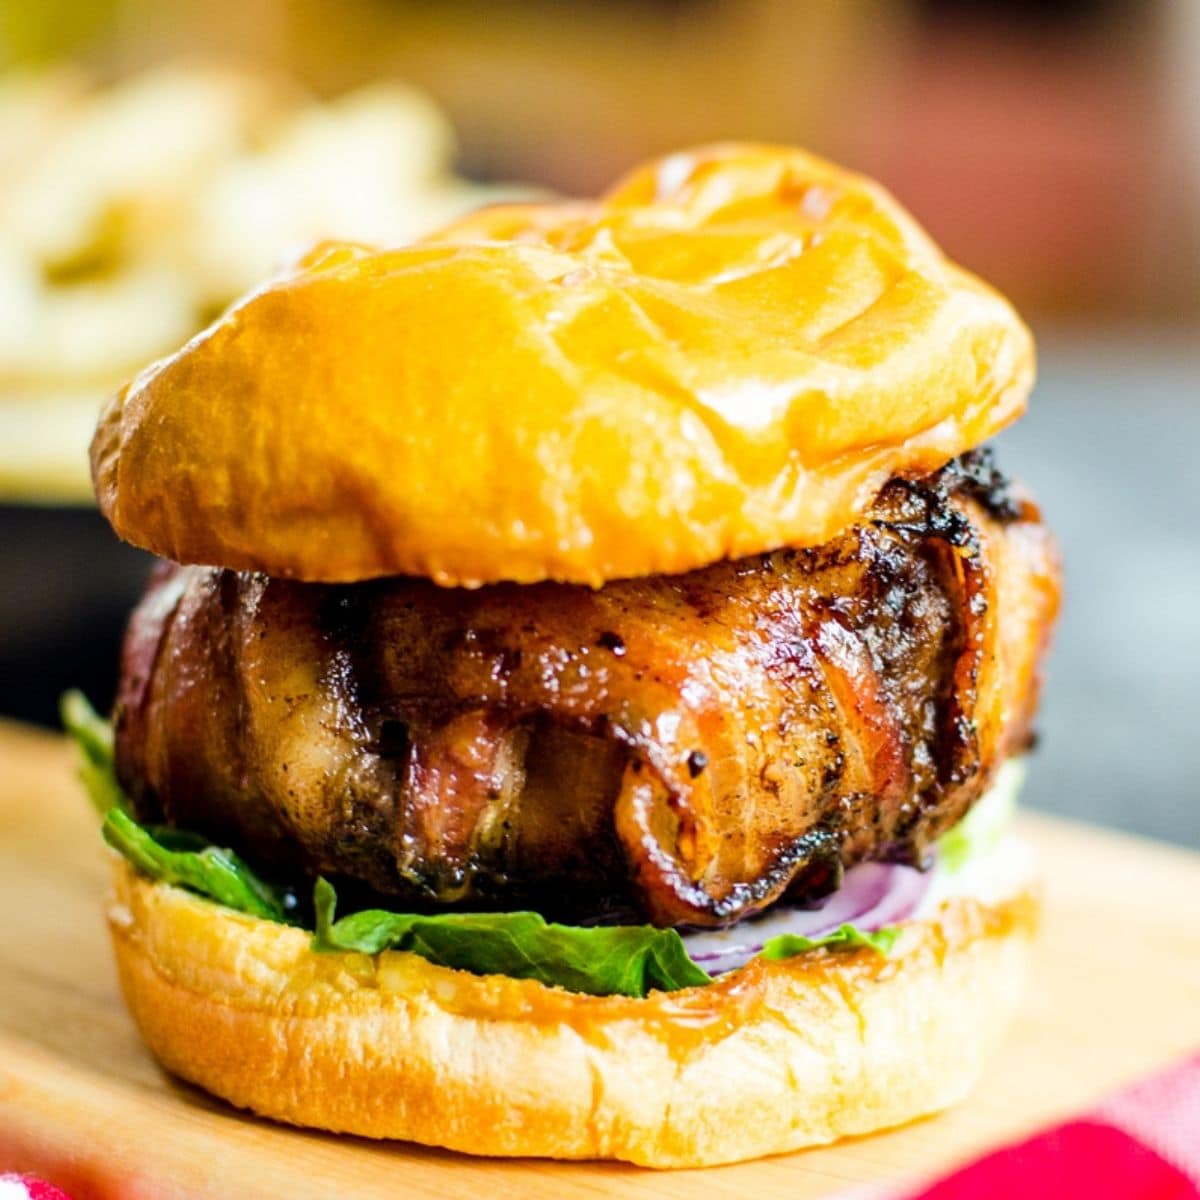 Best Hamburger Seasoning - Clover Meadows Beef